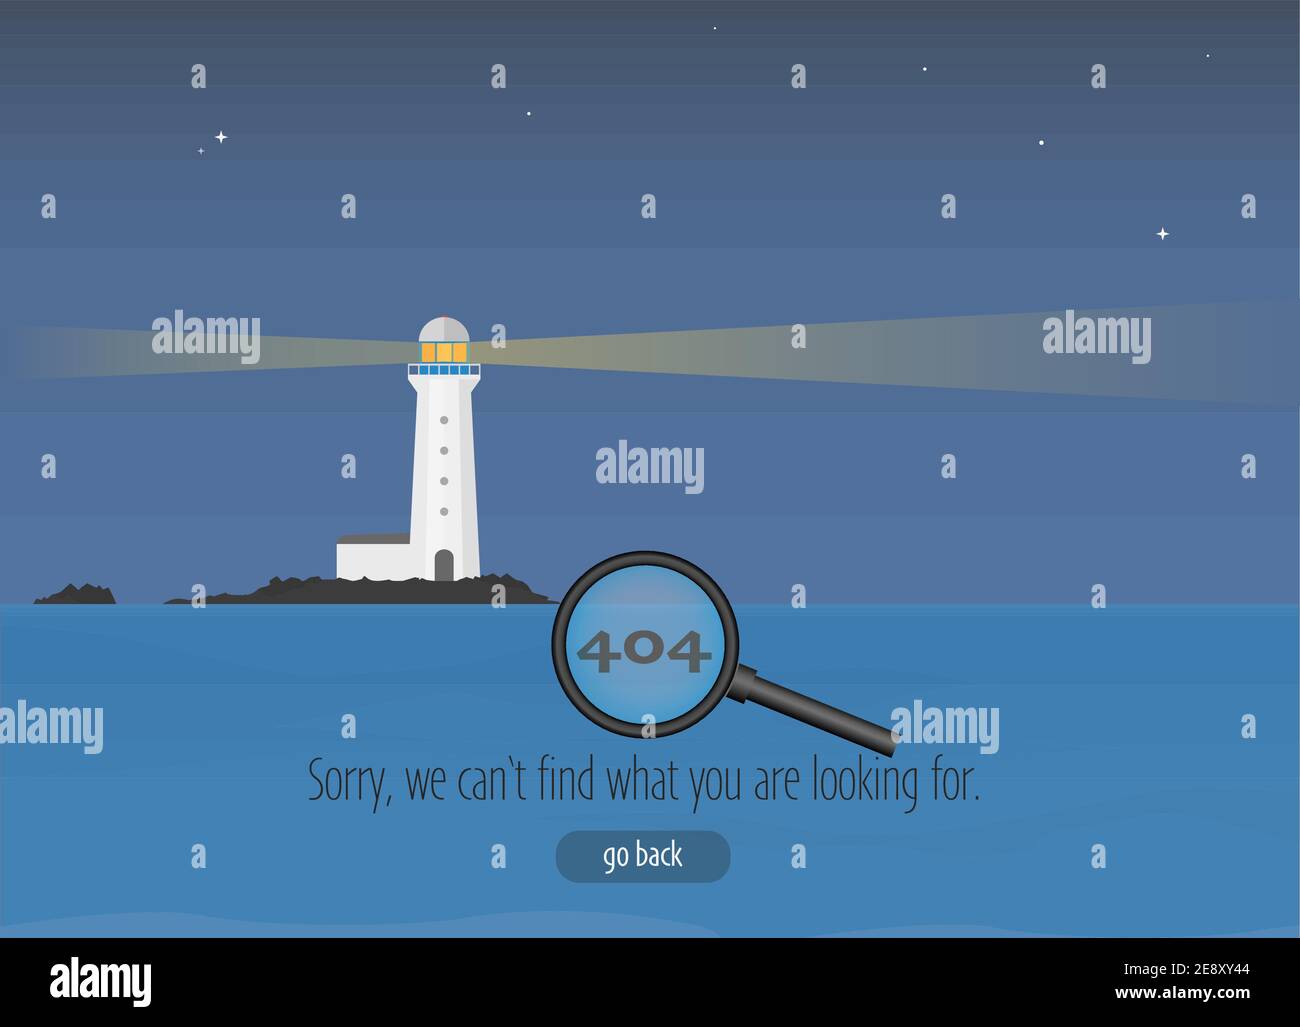 404 error webpage with lighthouse against dark ocean and sky vector illustration Stock Vector